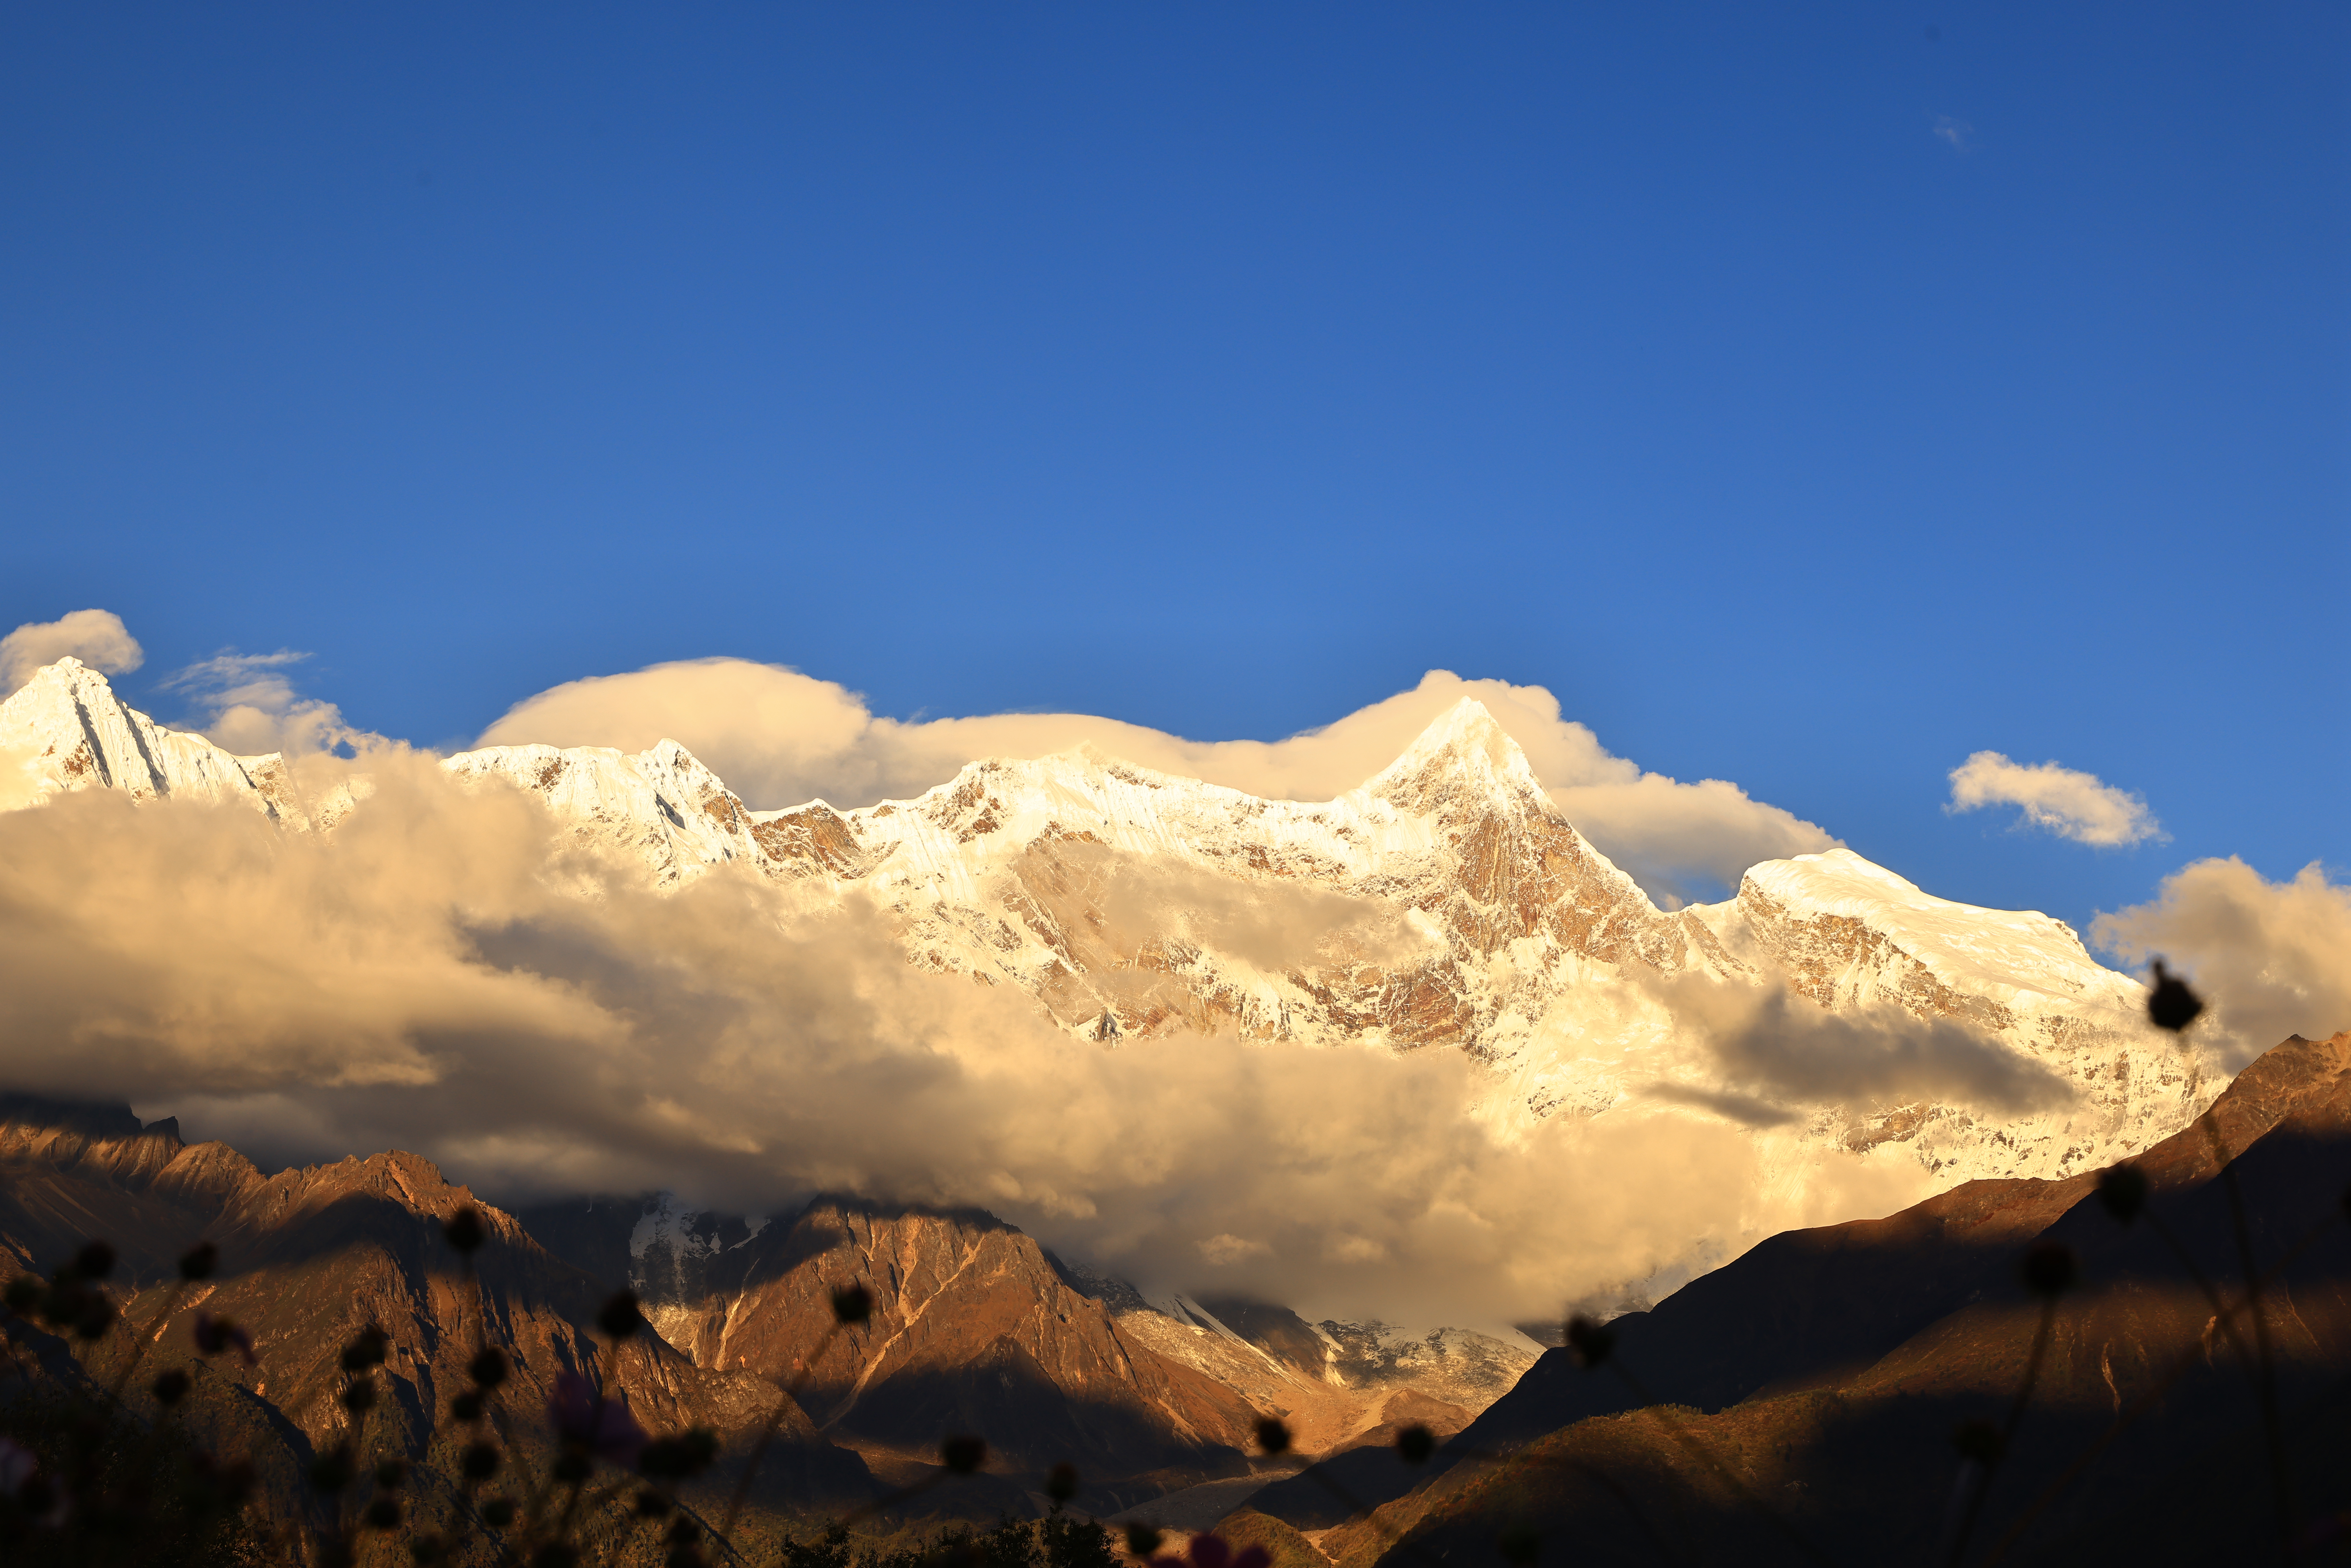 General 8192x5464 Tibet China mountains snowy mountain sky